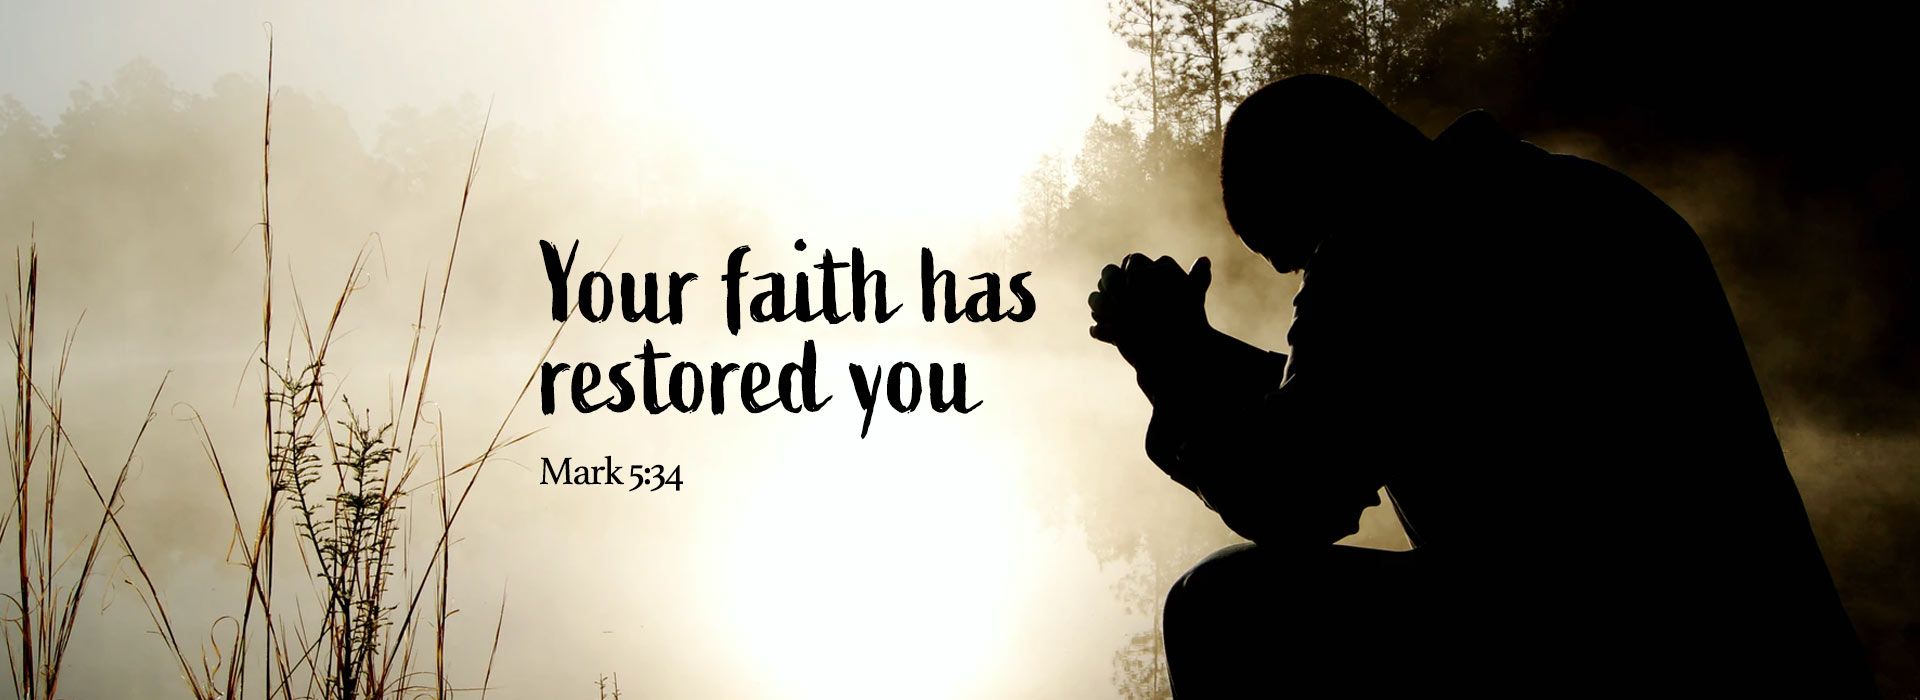 Your Faith has restored you.